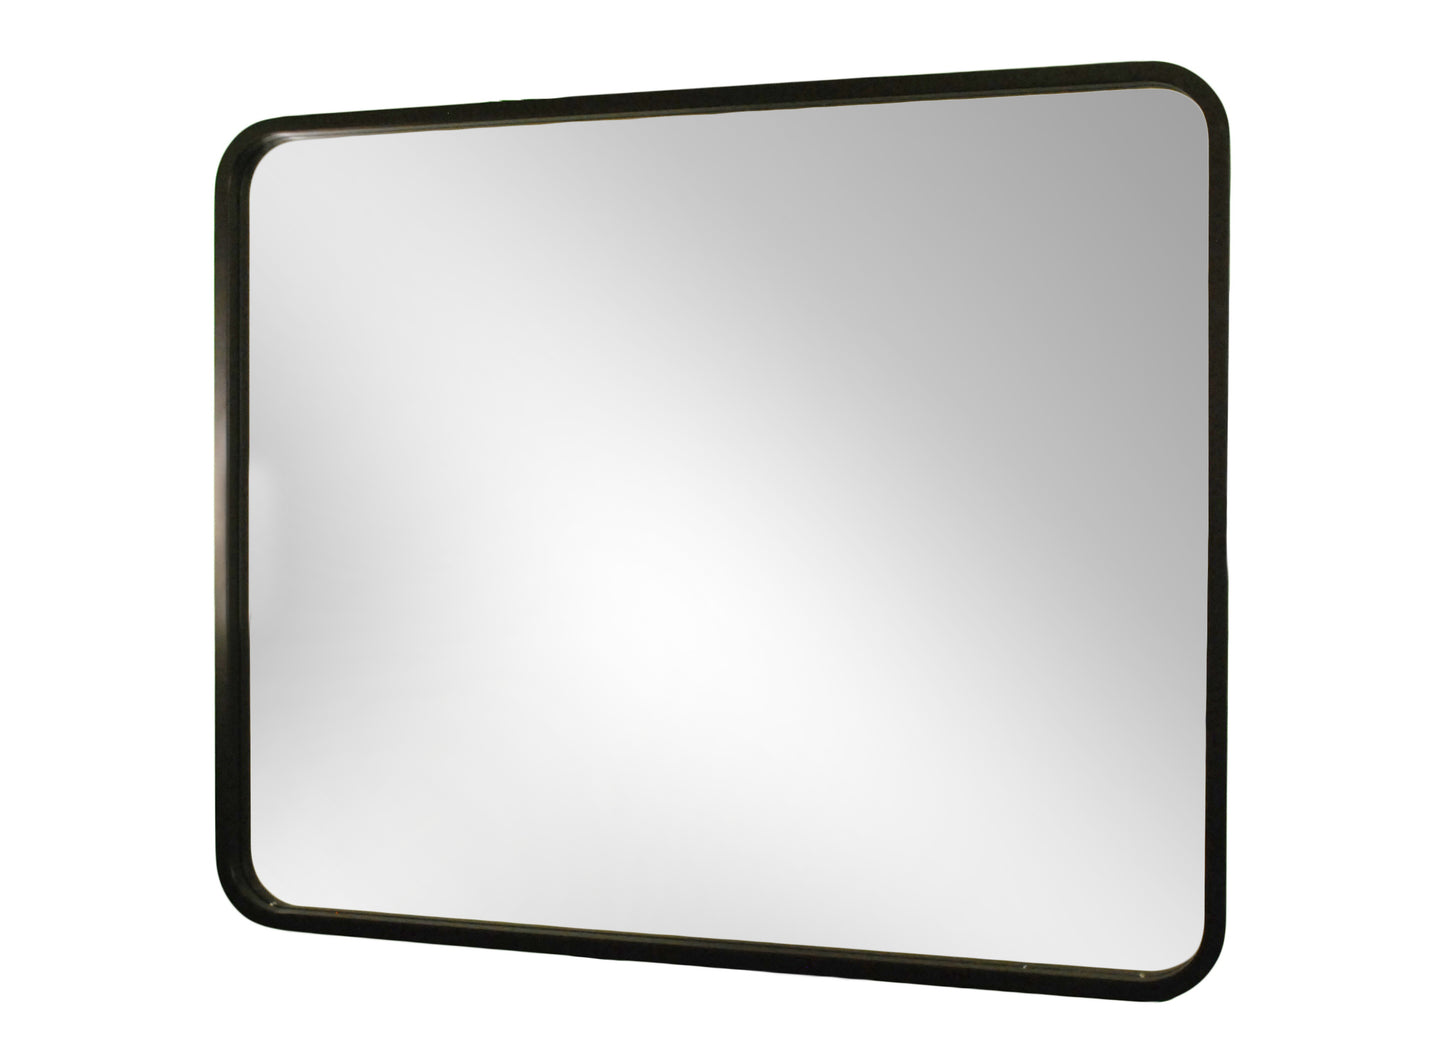 Rectangular shaped mirror with deep radius corners 